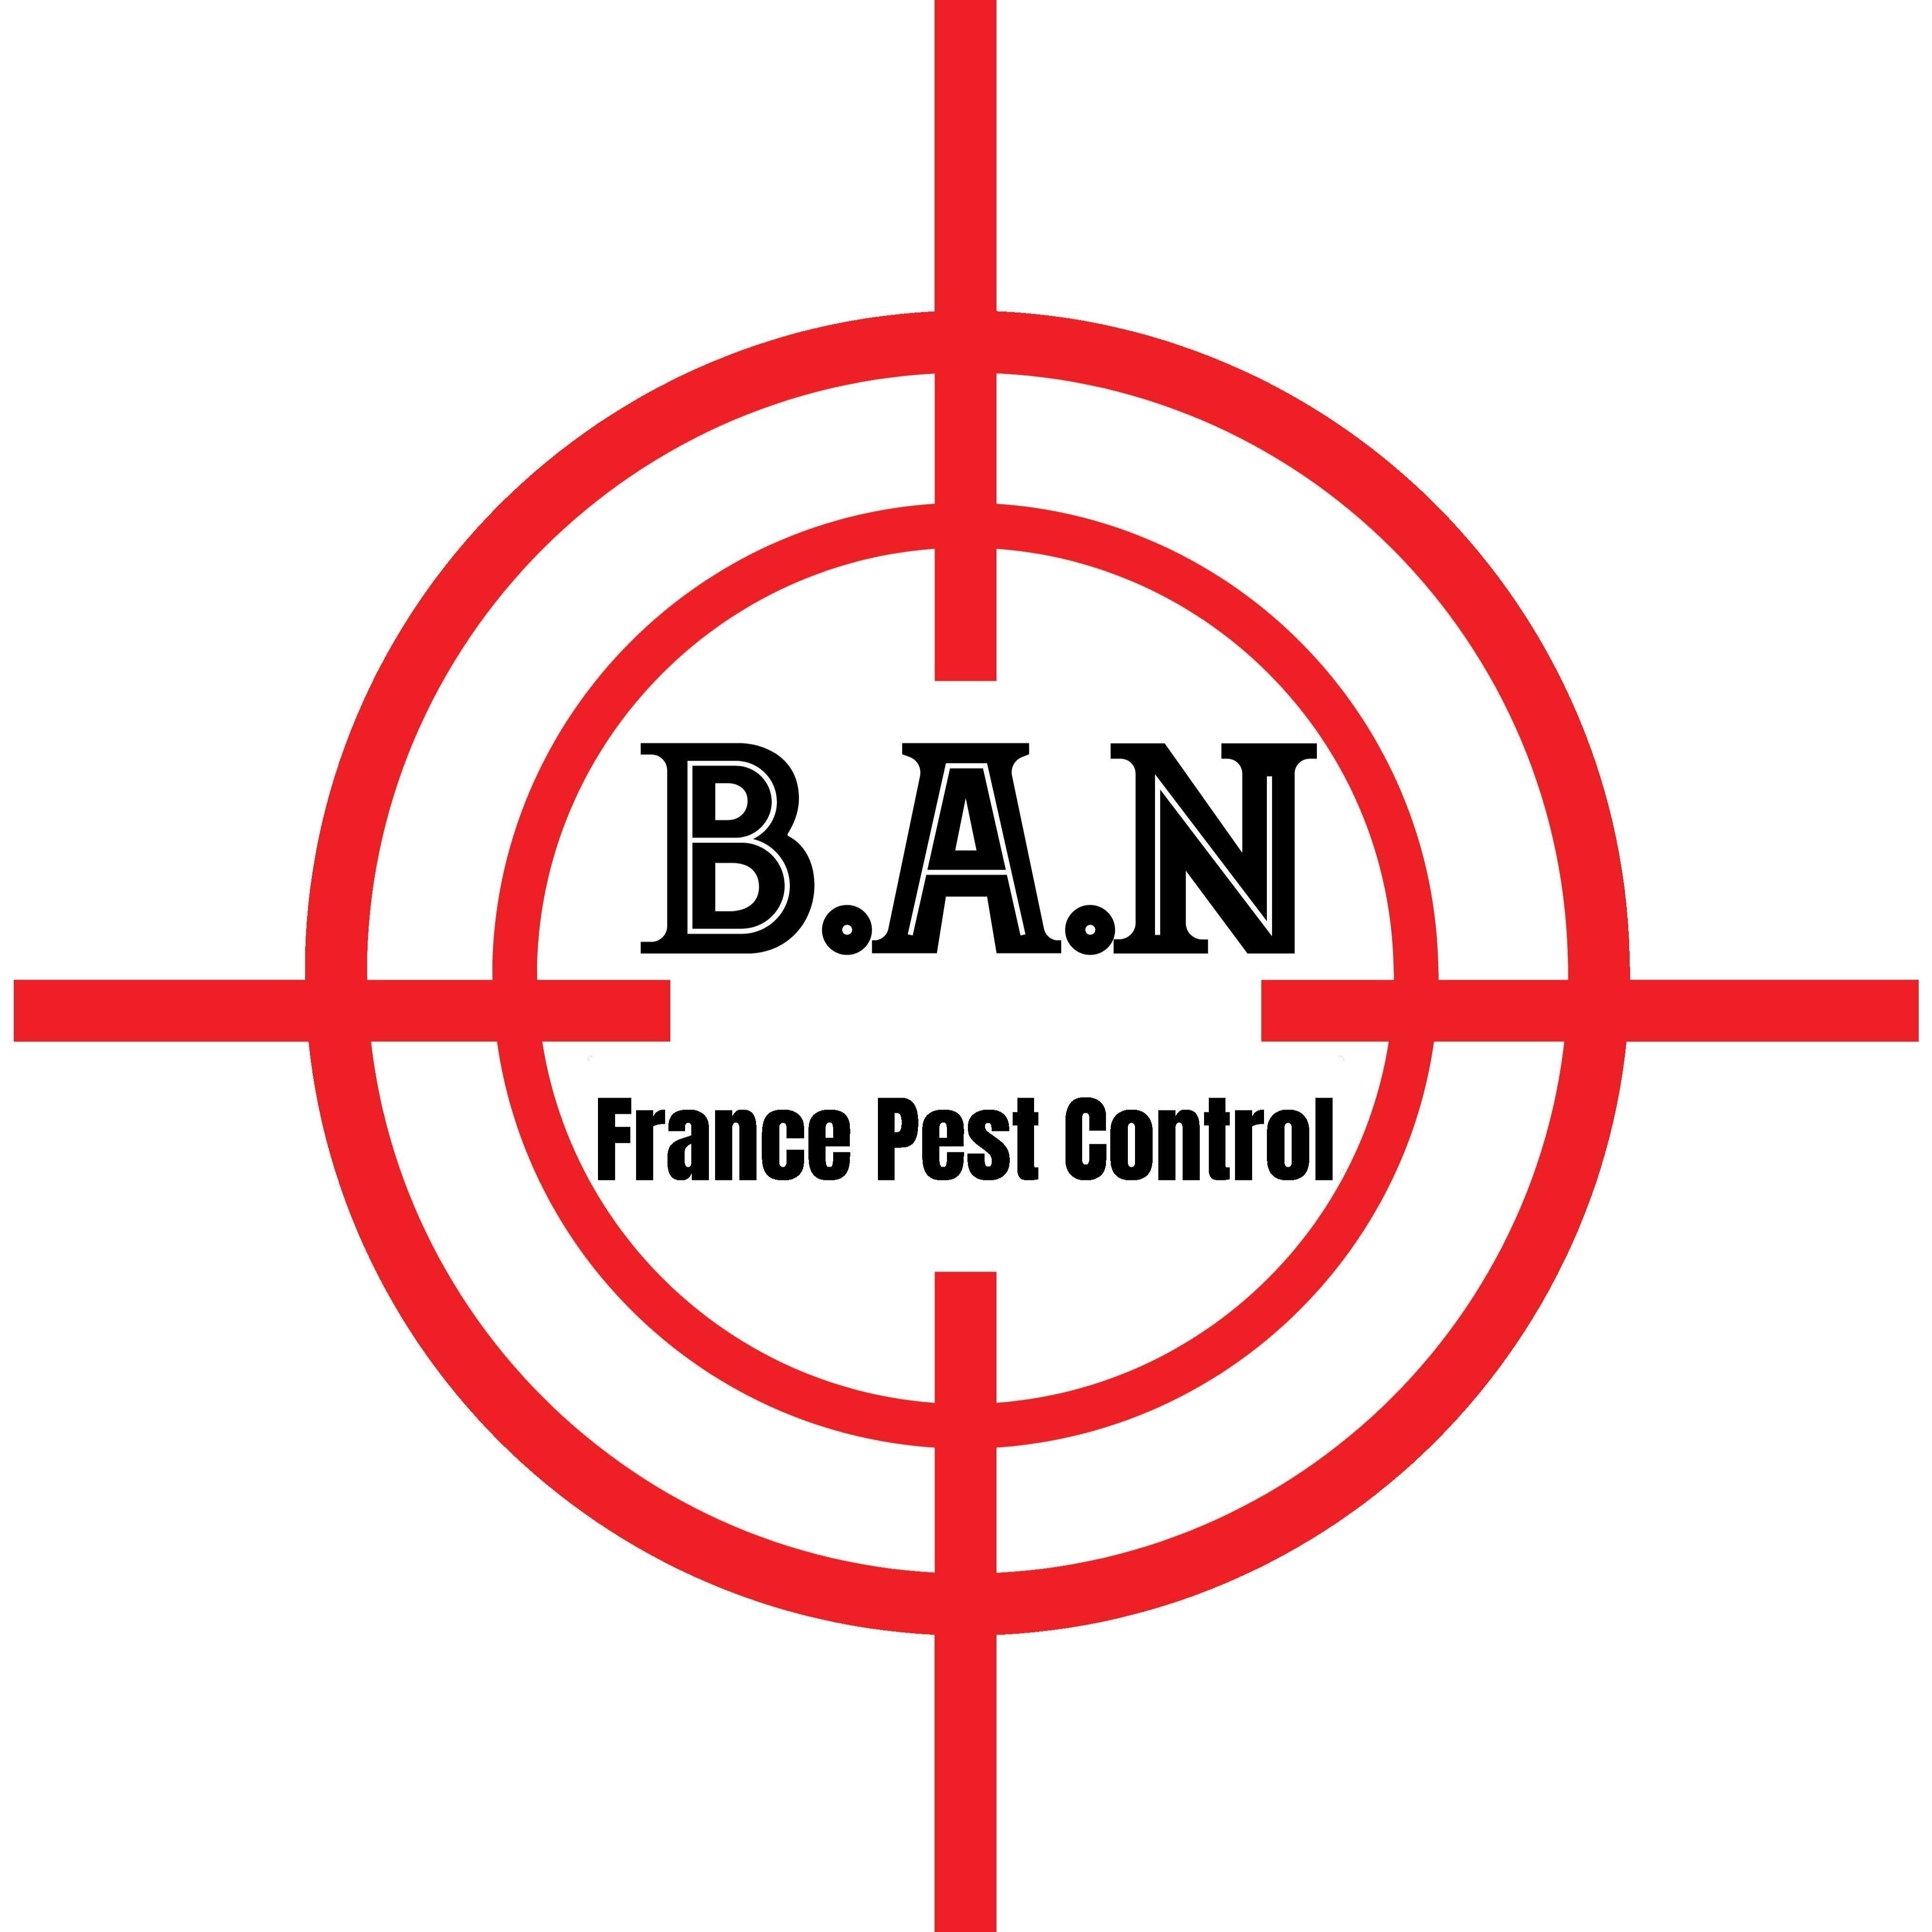 B.a.n - France Pest Control Paris